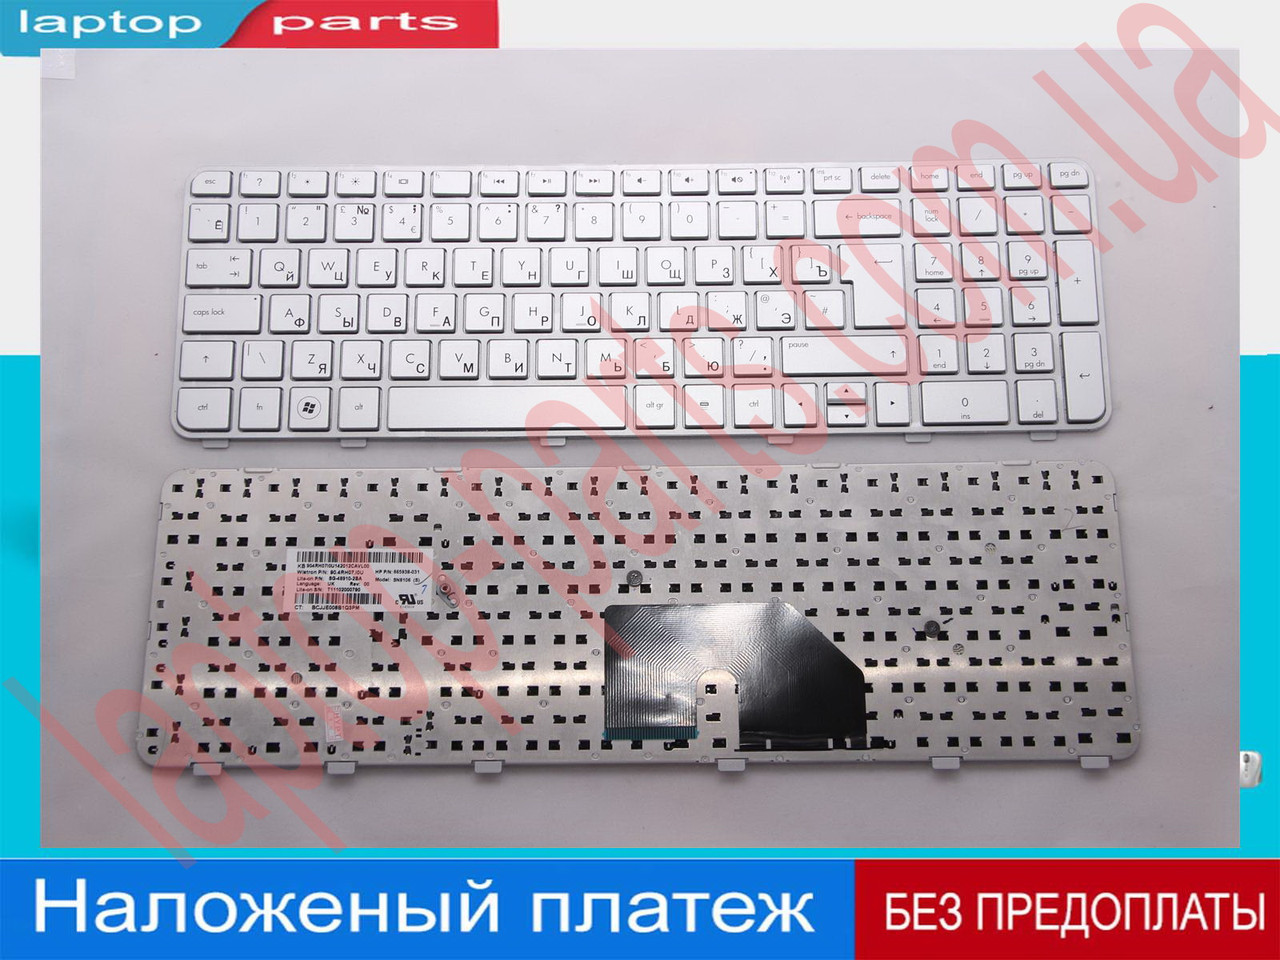 Купить Клавиатуру Для Ноутбука Hp Pavilion Dv6 Харьков